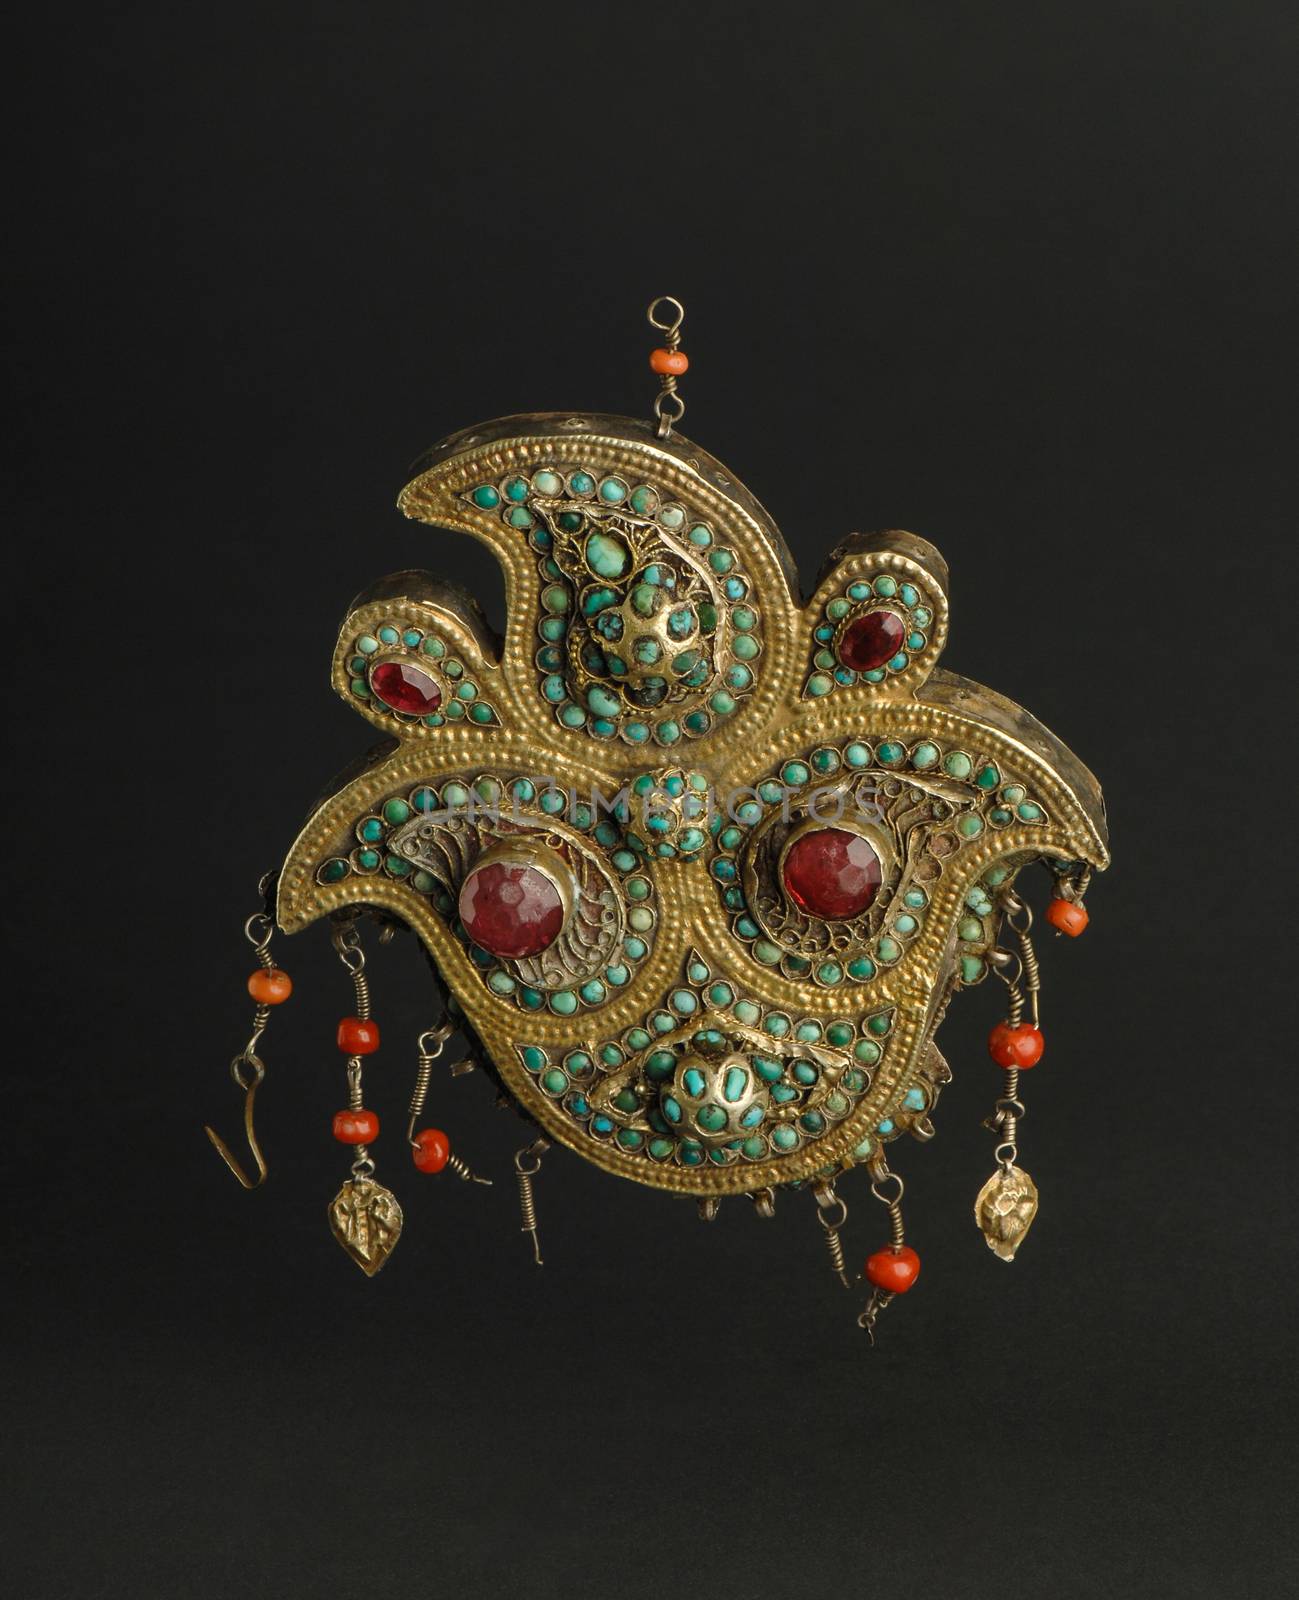 old Oriental ornaments by A_Karim